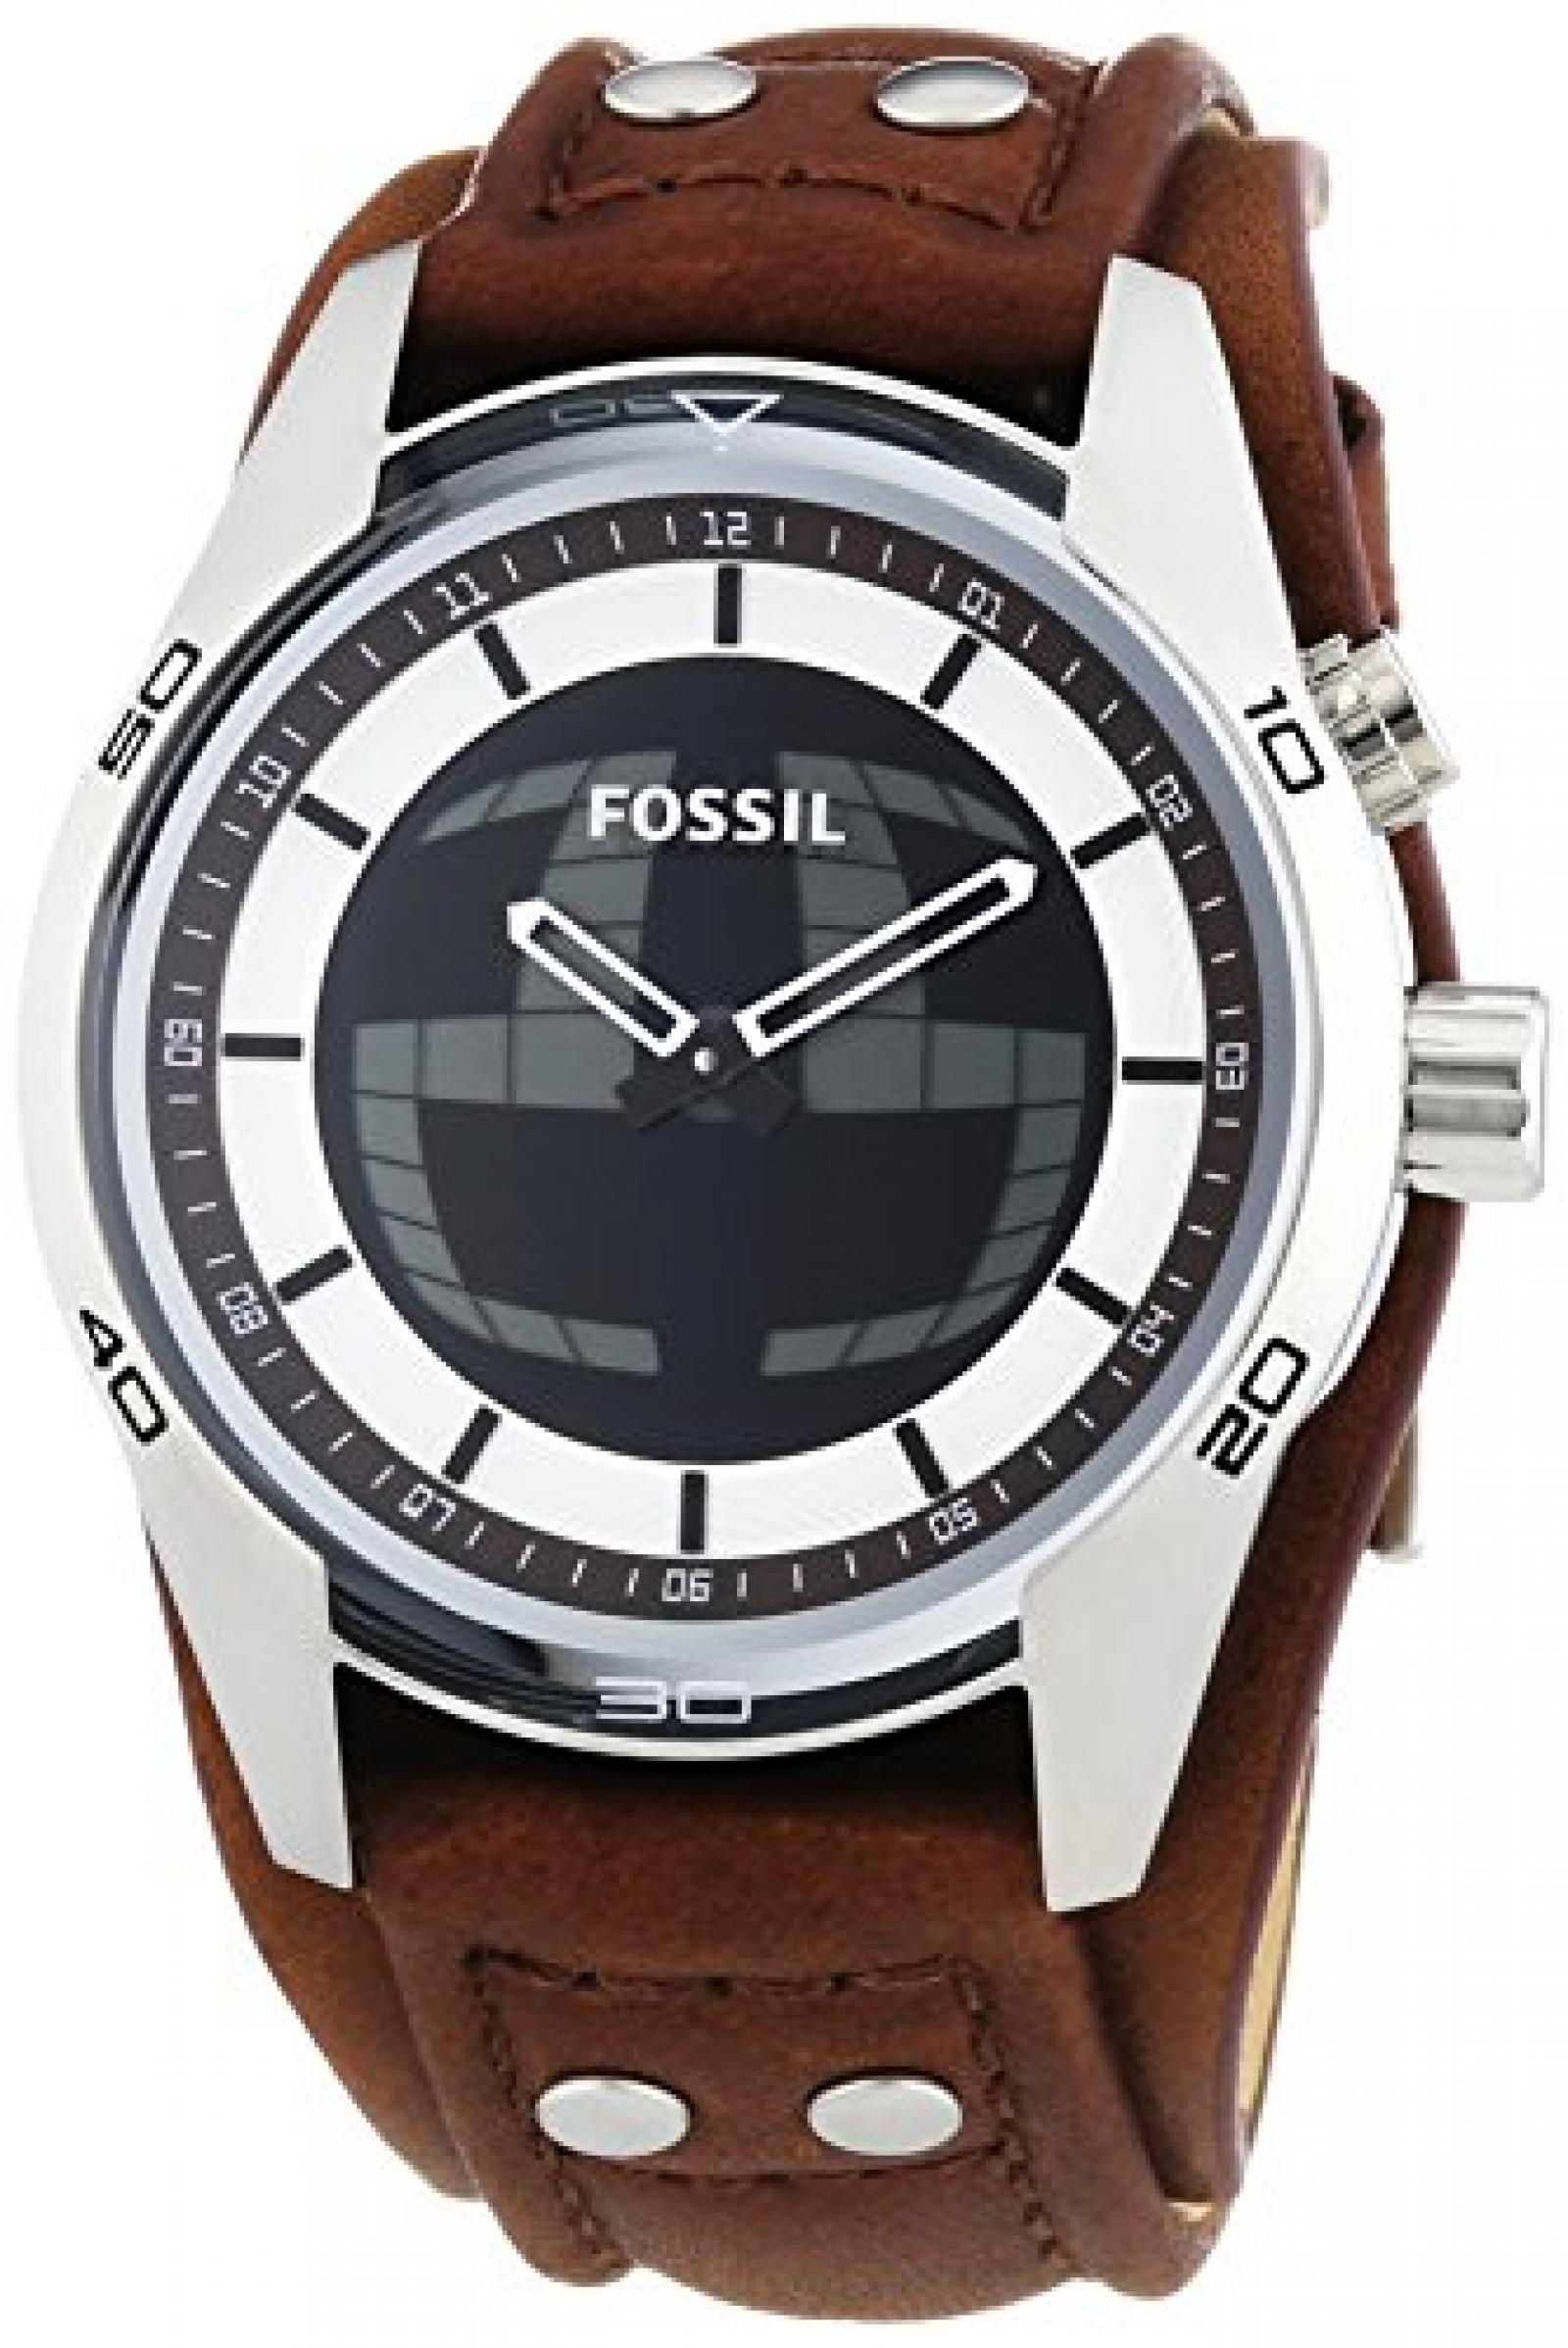 Fossil Herren-Armbanduhr XL Coachman Analog - Digital Quarz Leder JR1471 